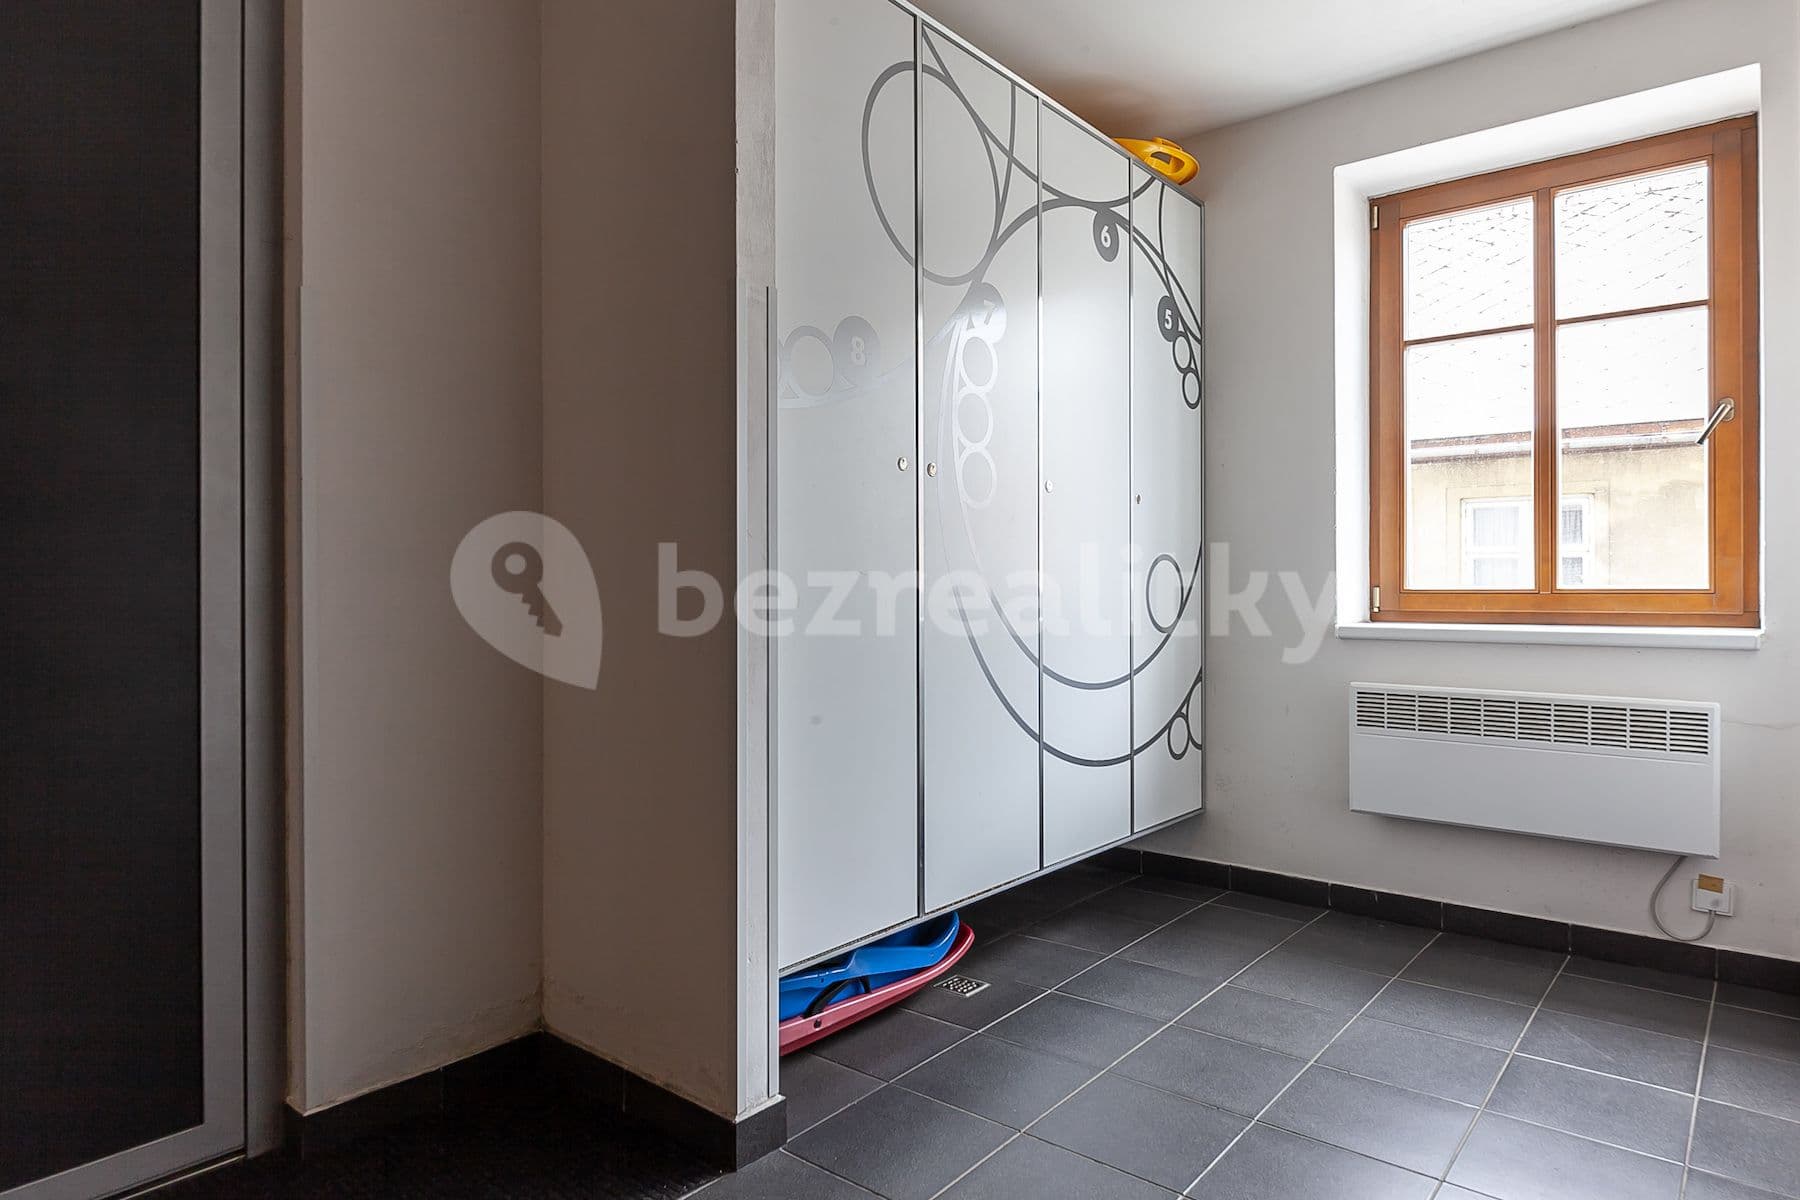 1 bedroom with open-plan kitchen flat for sale, 56 m², Rokytno, Rokytnice nad Jizerou, Liberecký Region